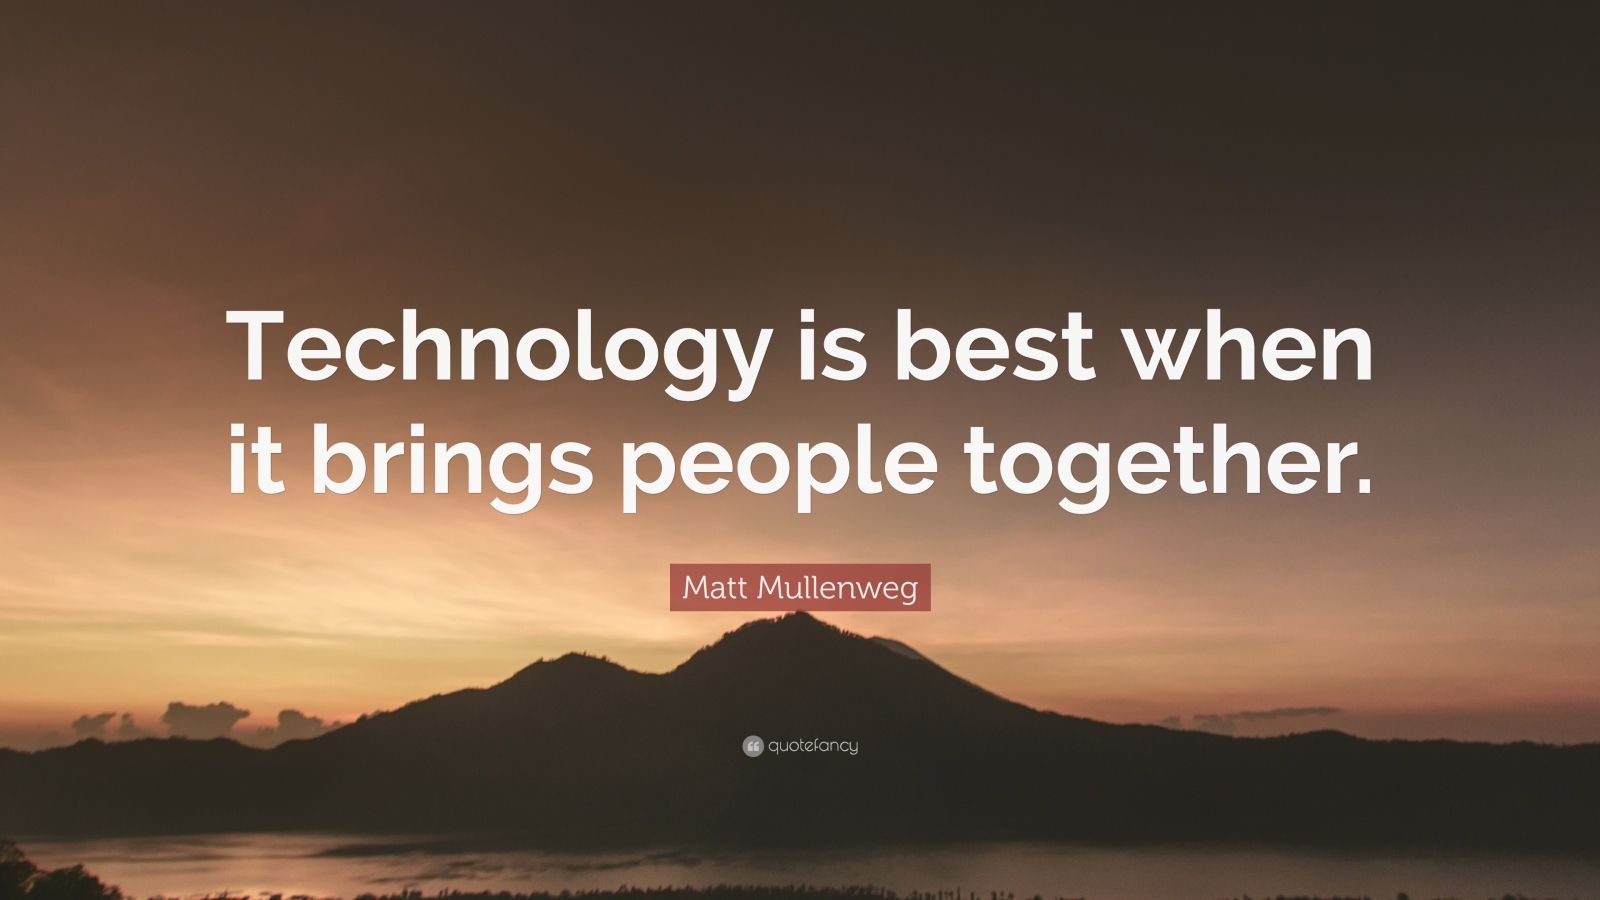 Matt Mullenweg Quote: “Technology is best when it brings people ...